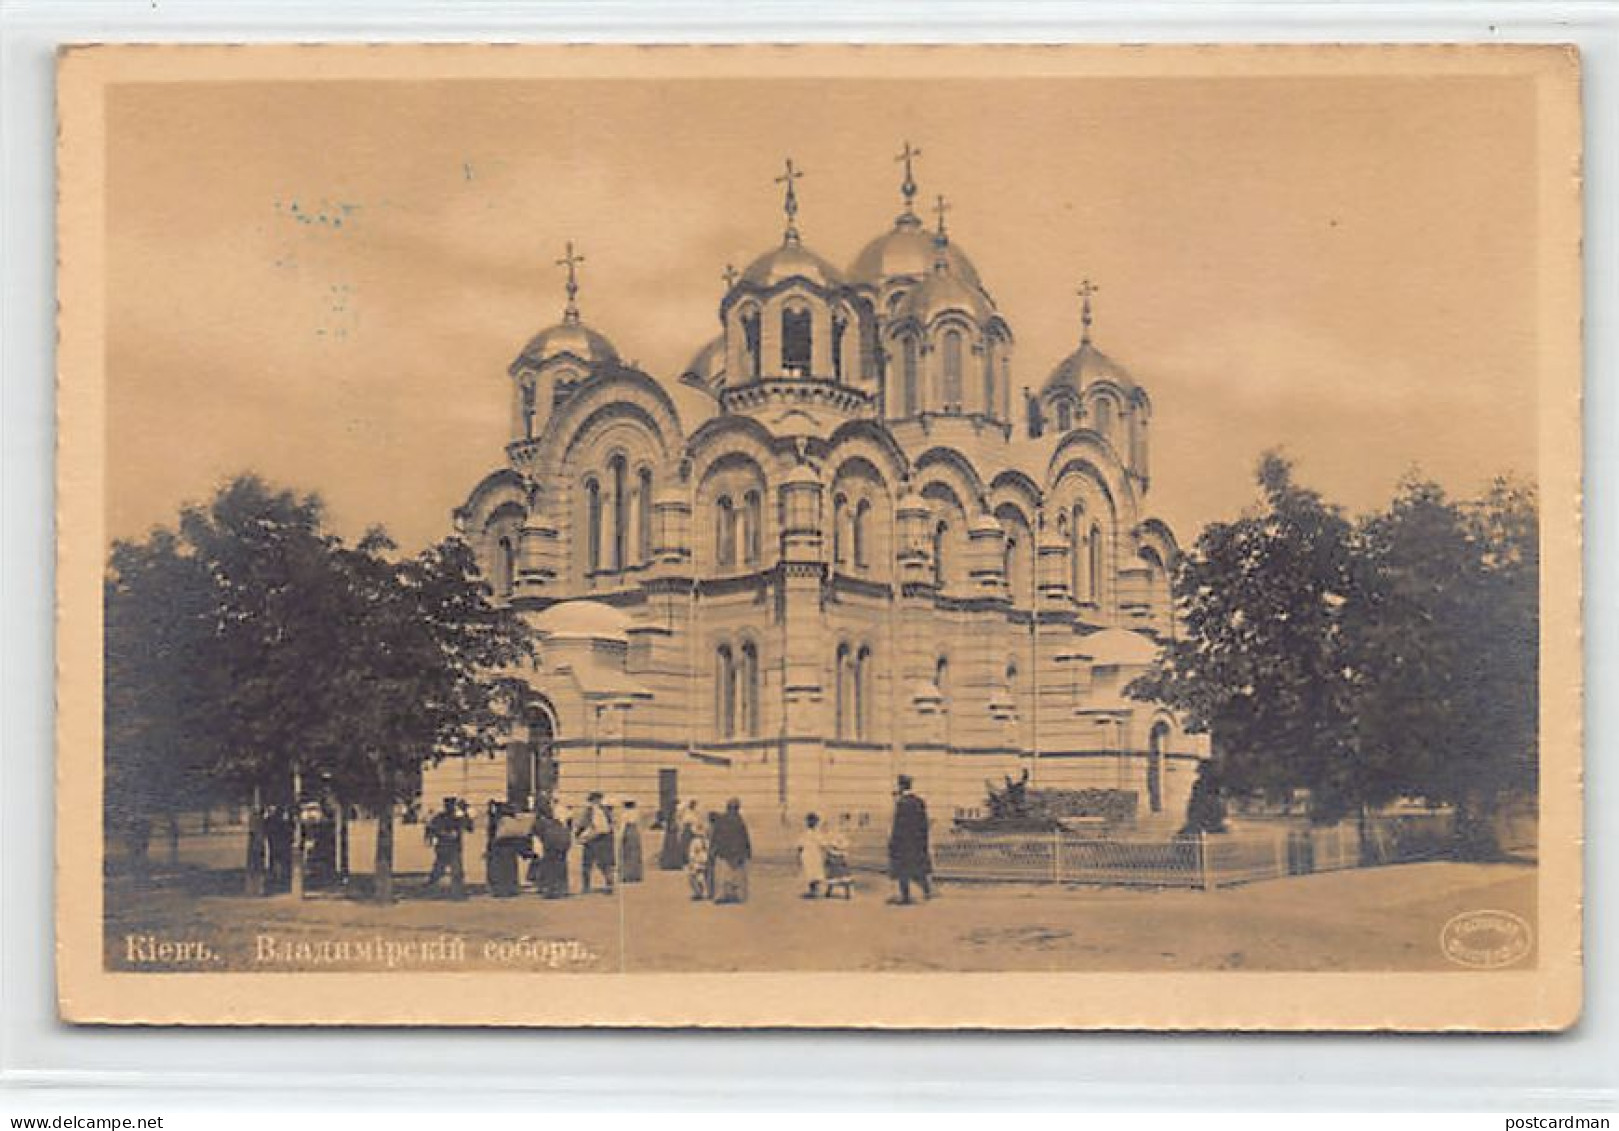 Ukraine - KYIV Kiev - Vladimir Cathedral - Publ. Axel Eliasson  - Ukraine